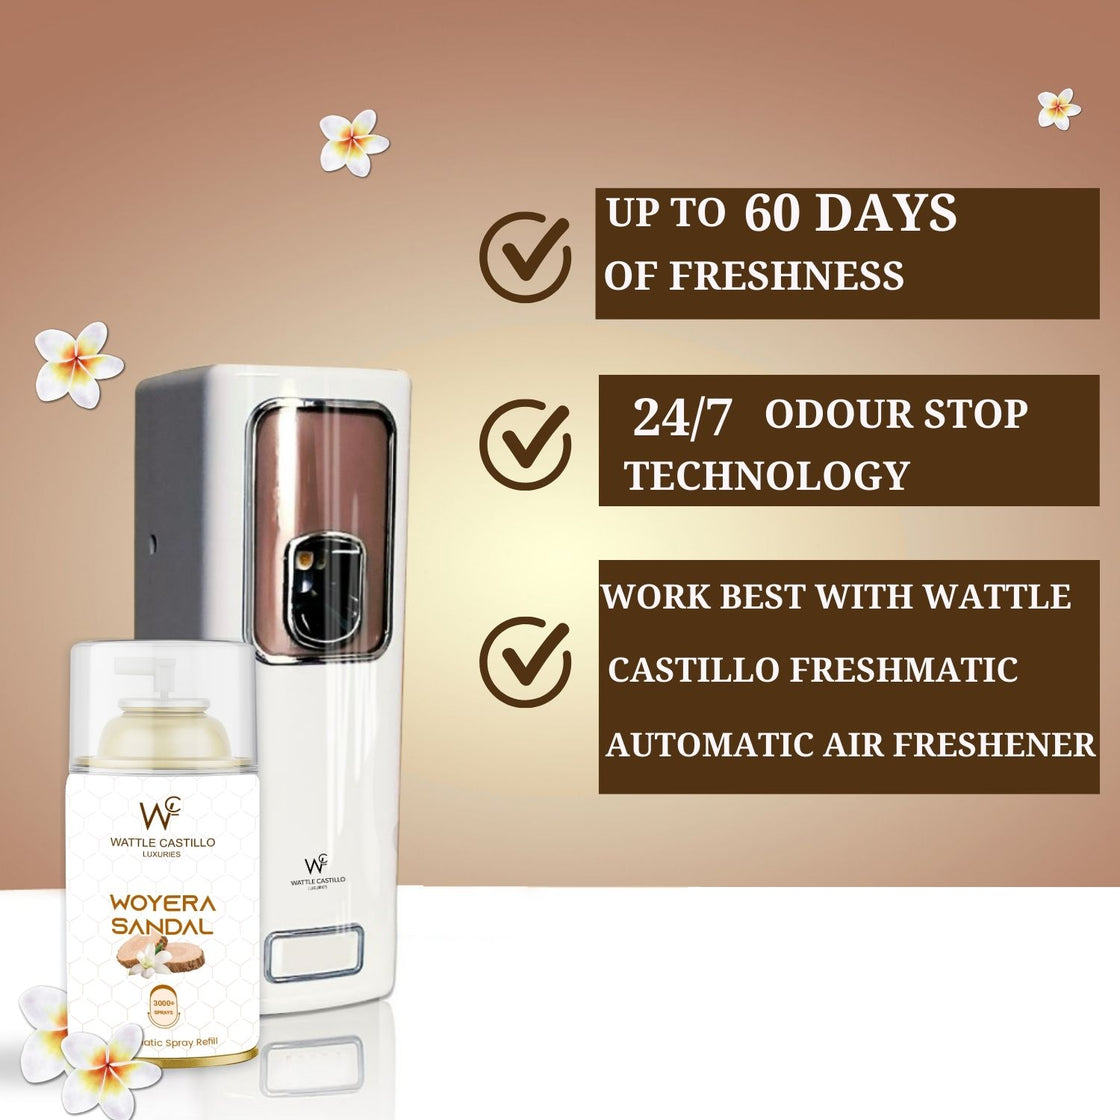 Wattle Castillo Woyera Sandal Automatic Room Fresheners Refill (265ml) & 3000+ Sprays Guaranteed Lasts up to 80 days